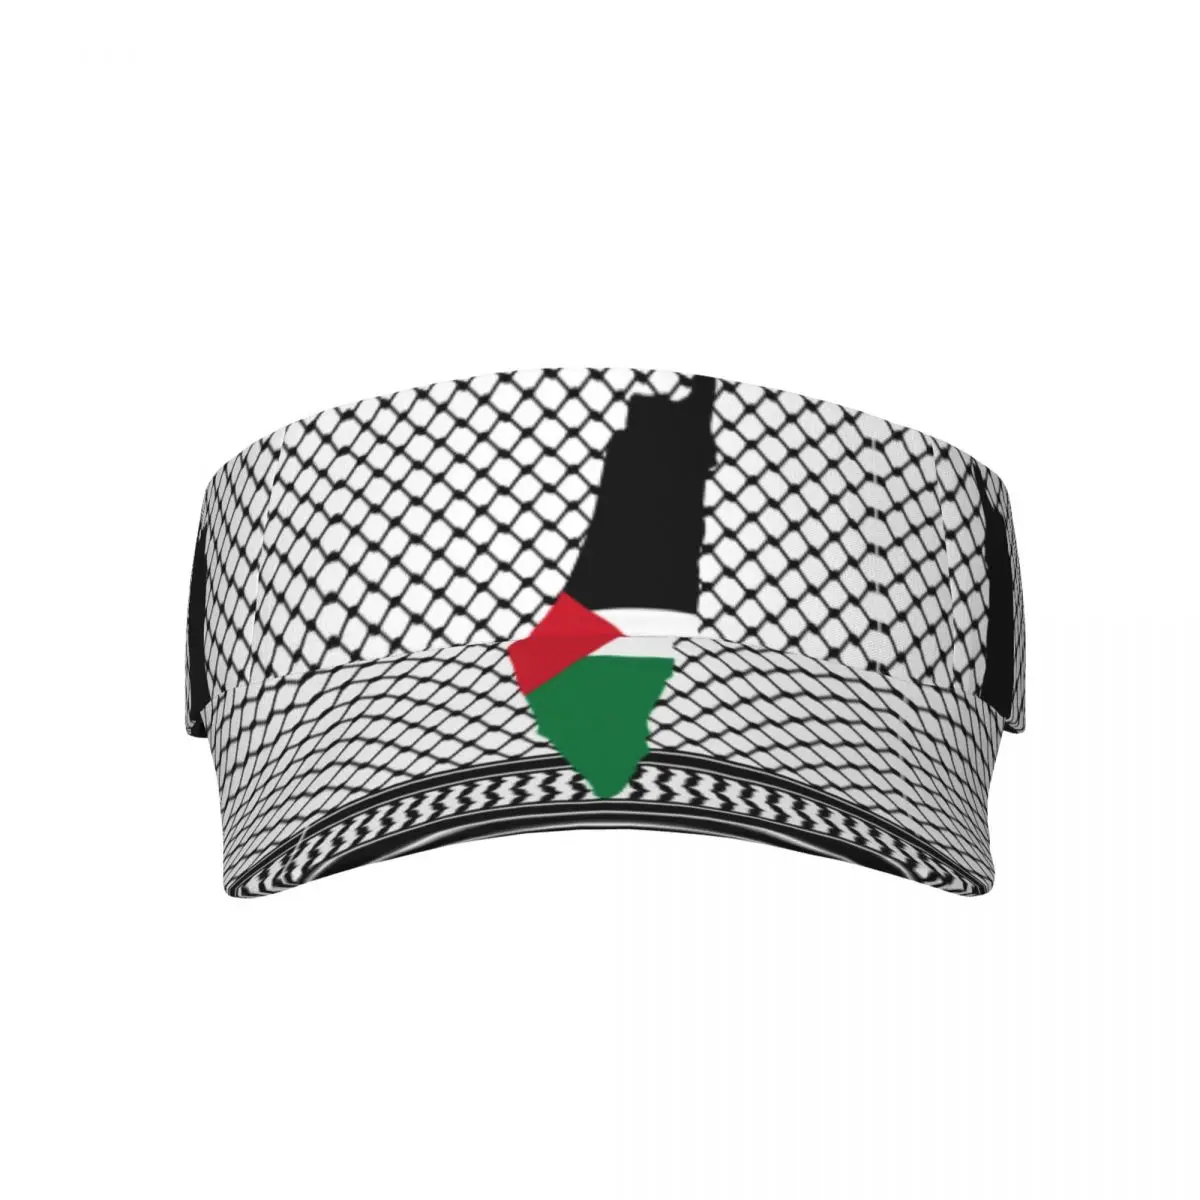 

Palestine Empty Top Hat Outdoor Adjustable Visor Uv Beach Tennis Caps for Adult Sunscreen Baseball Cap